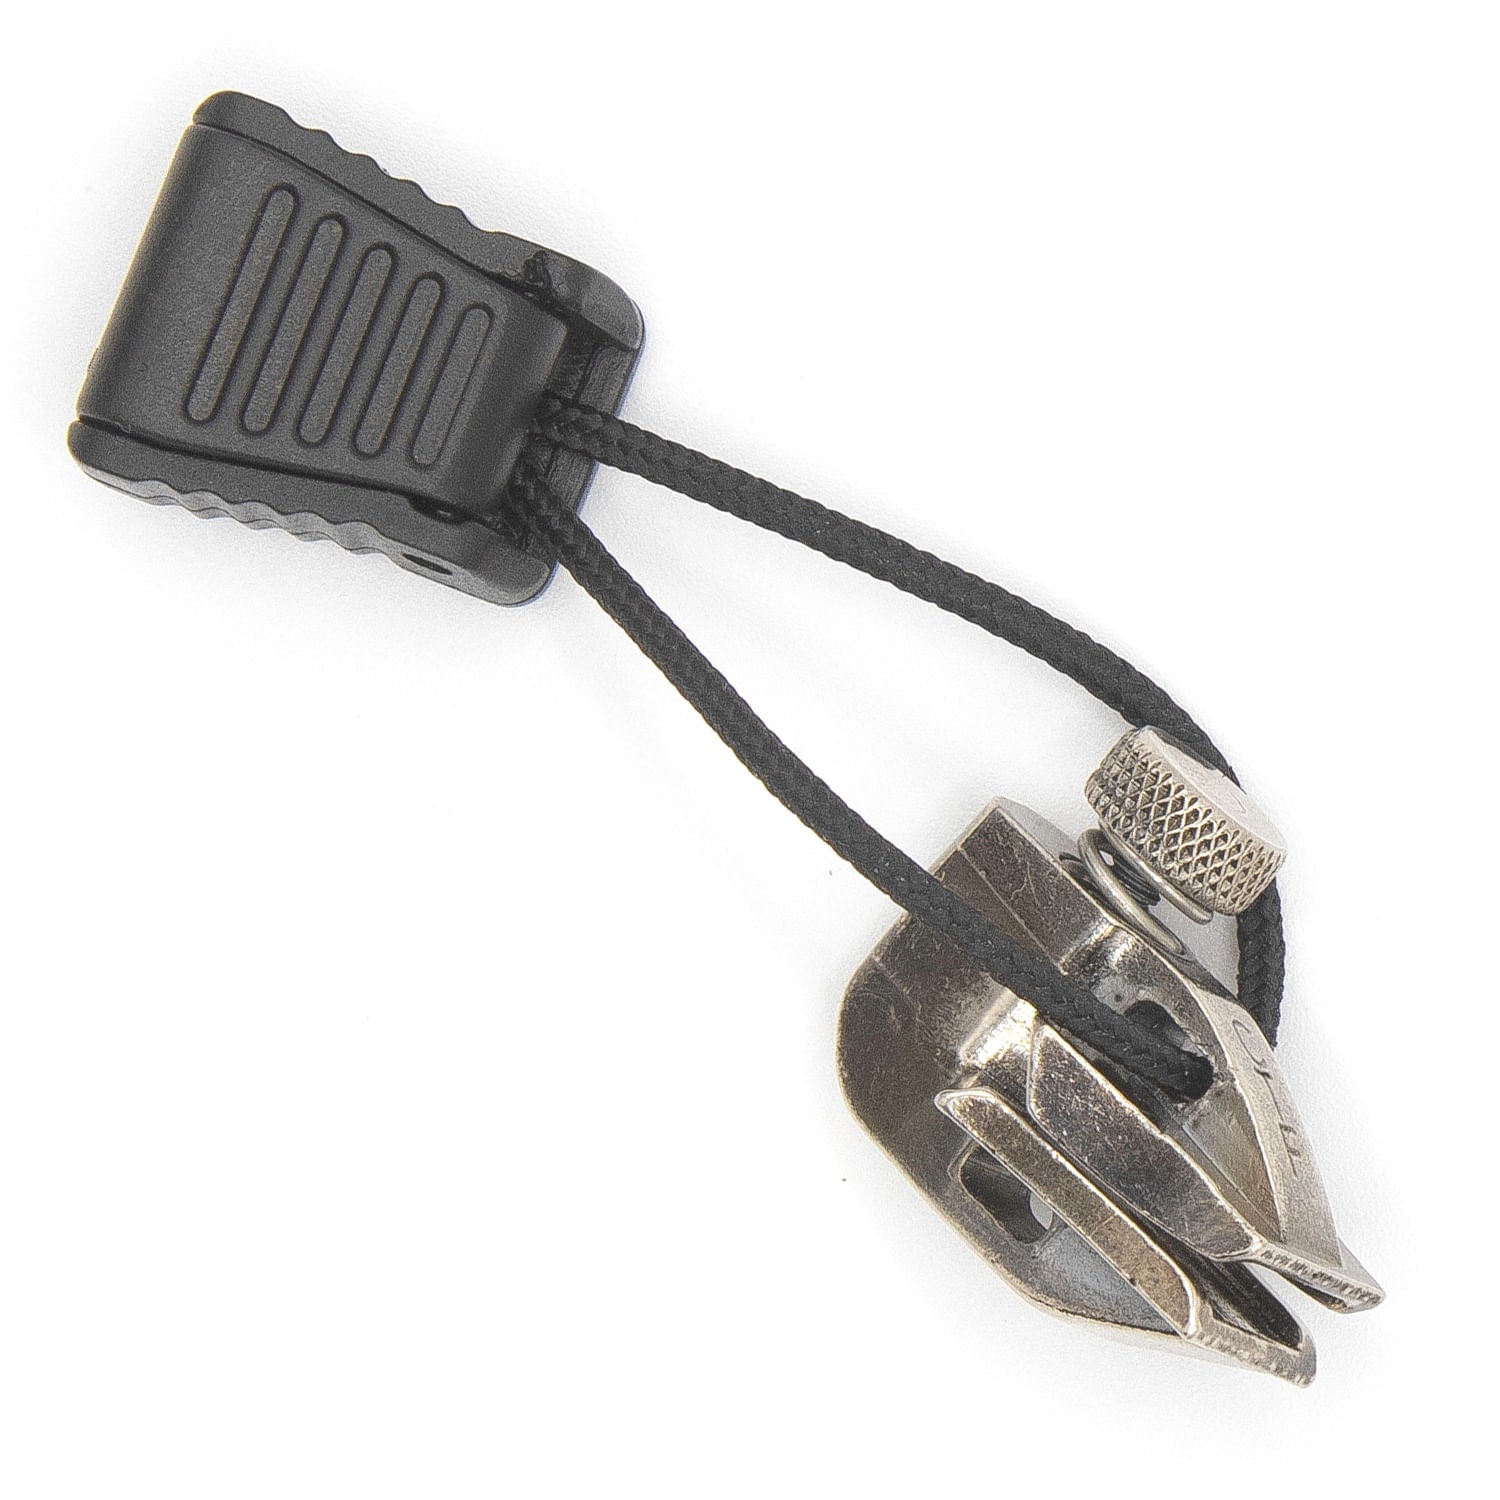 Trident FixnZip Replacement Zipper Repair Kit for Wetsuit